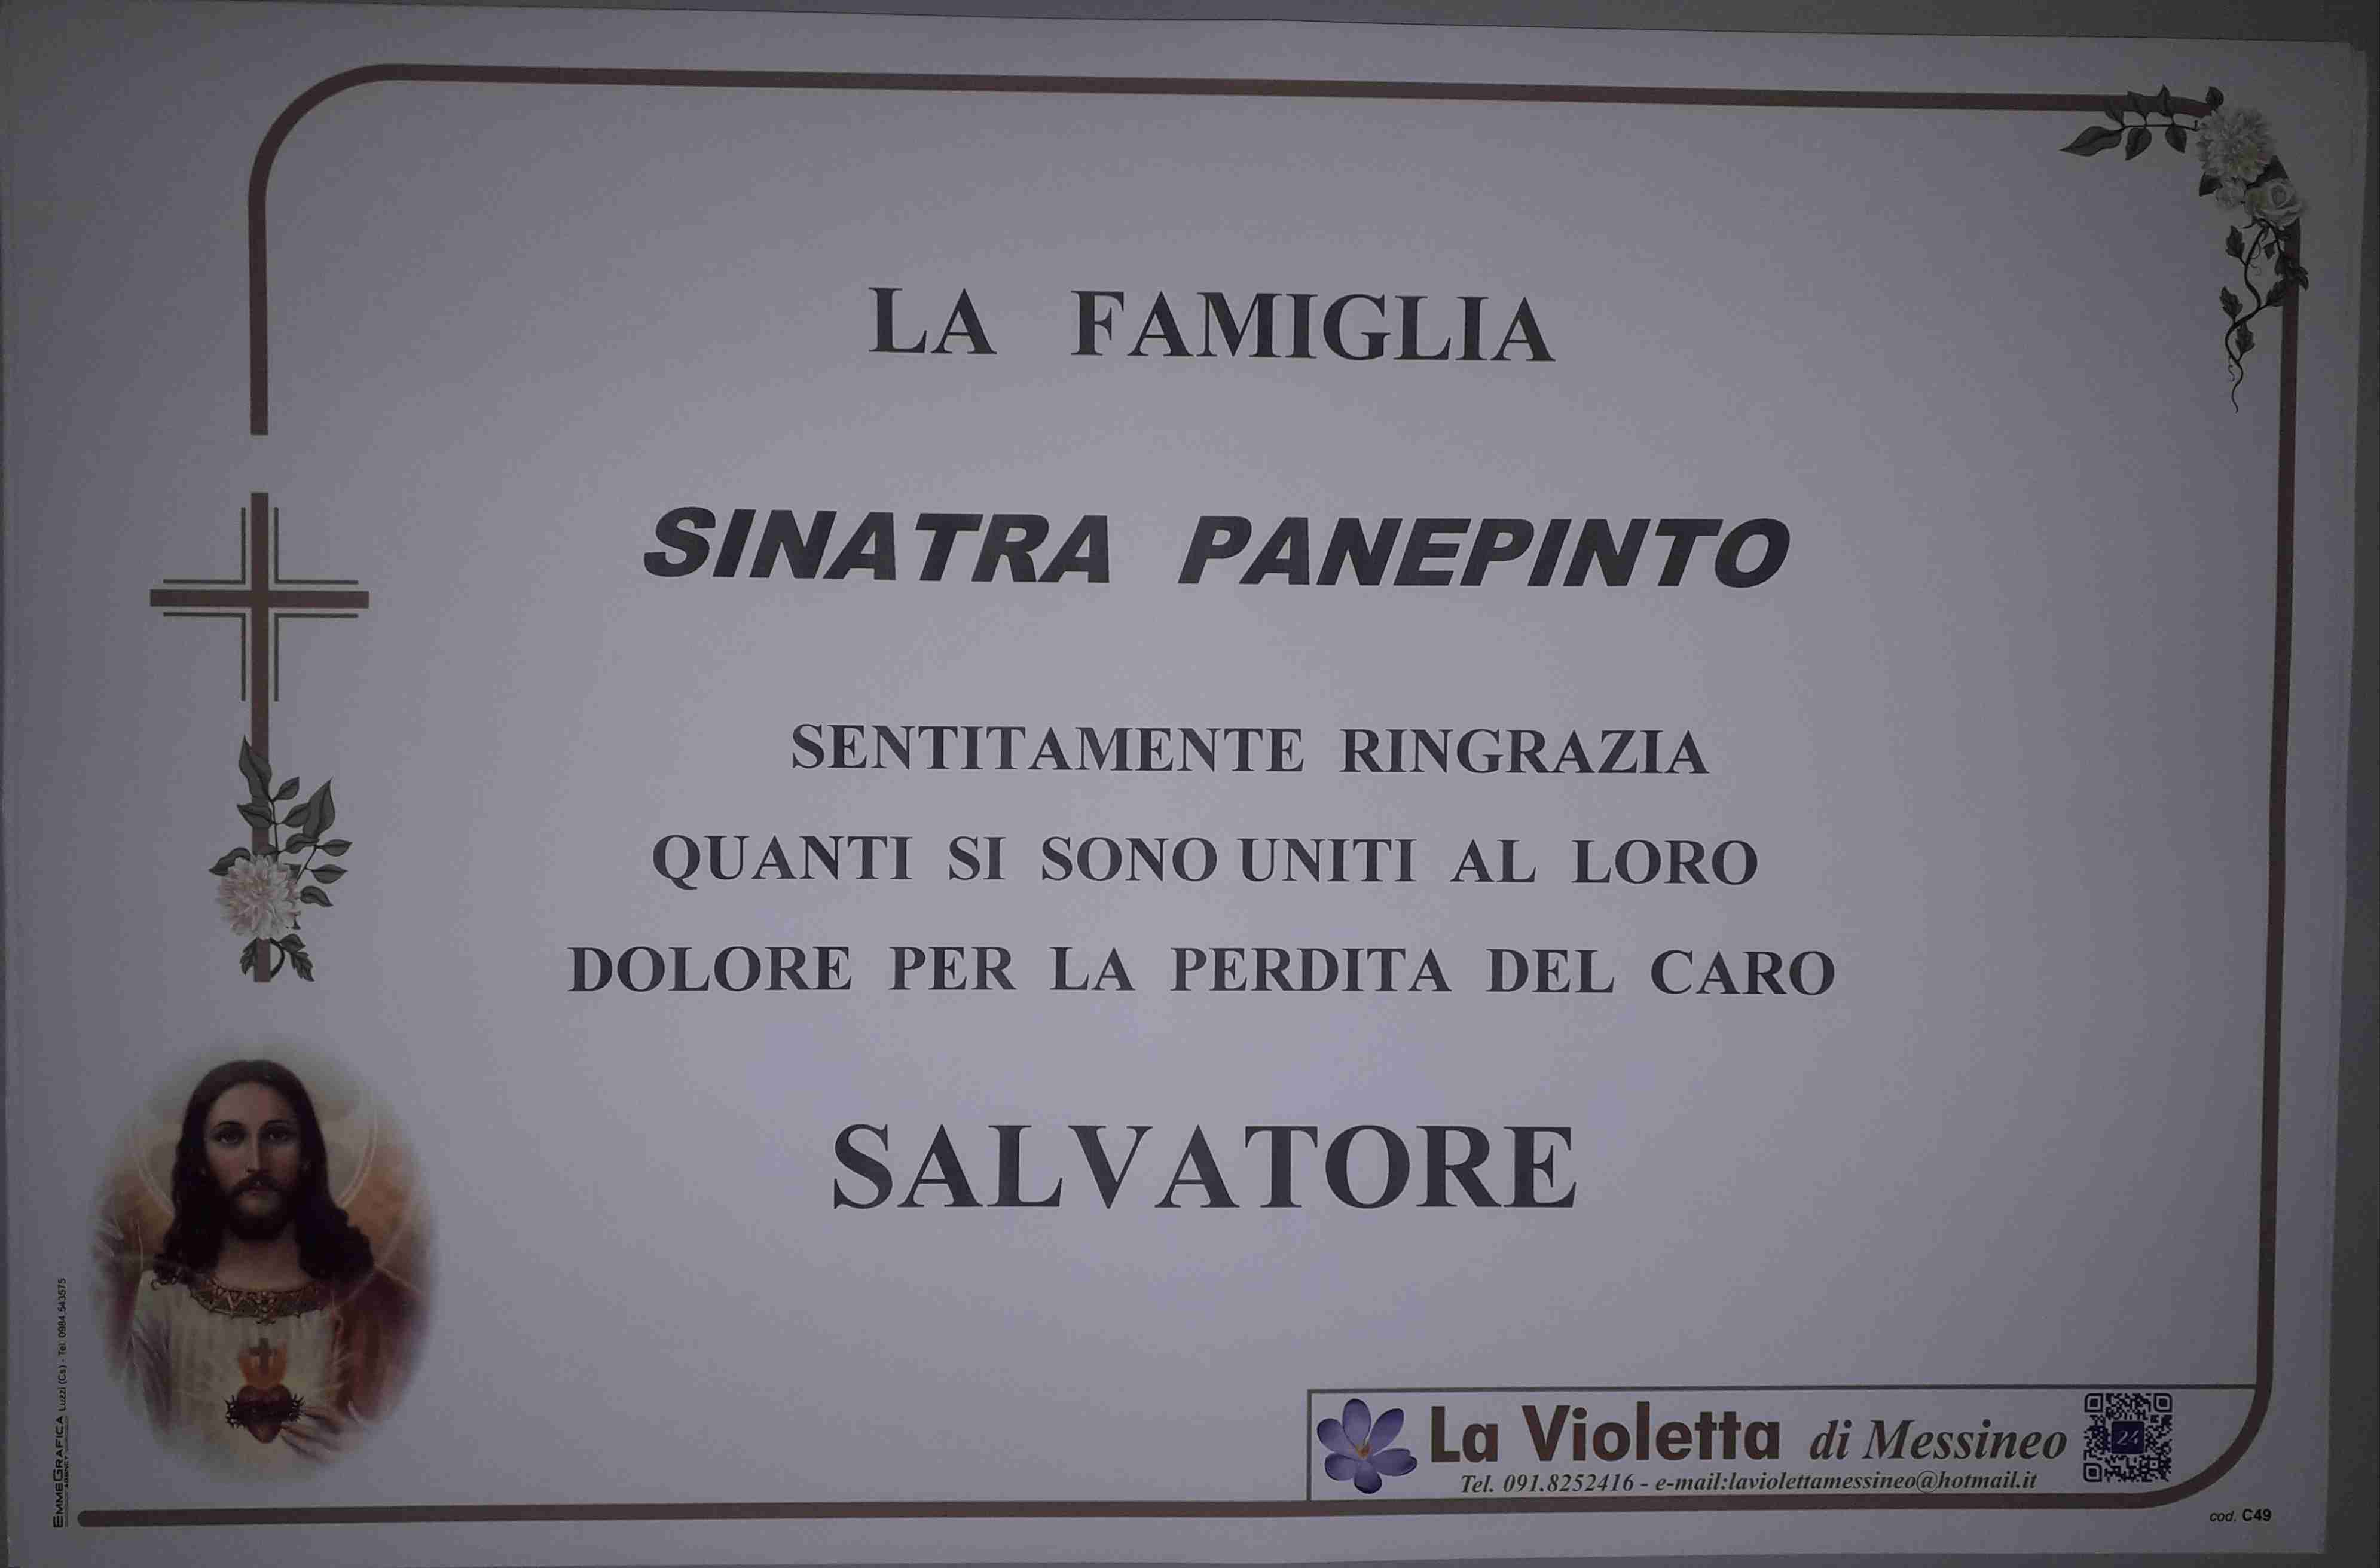 Salvatore Sinatra